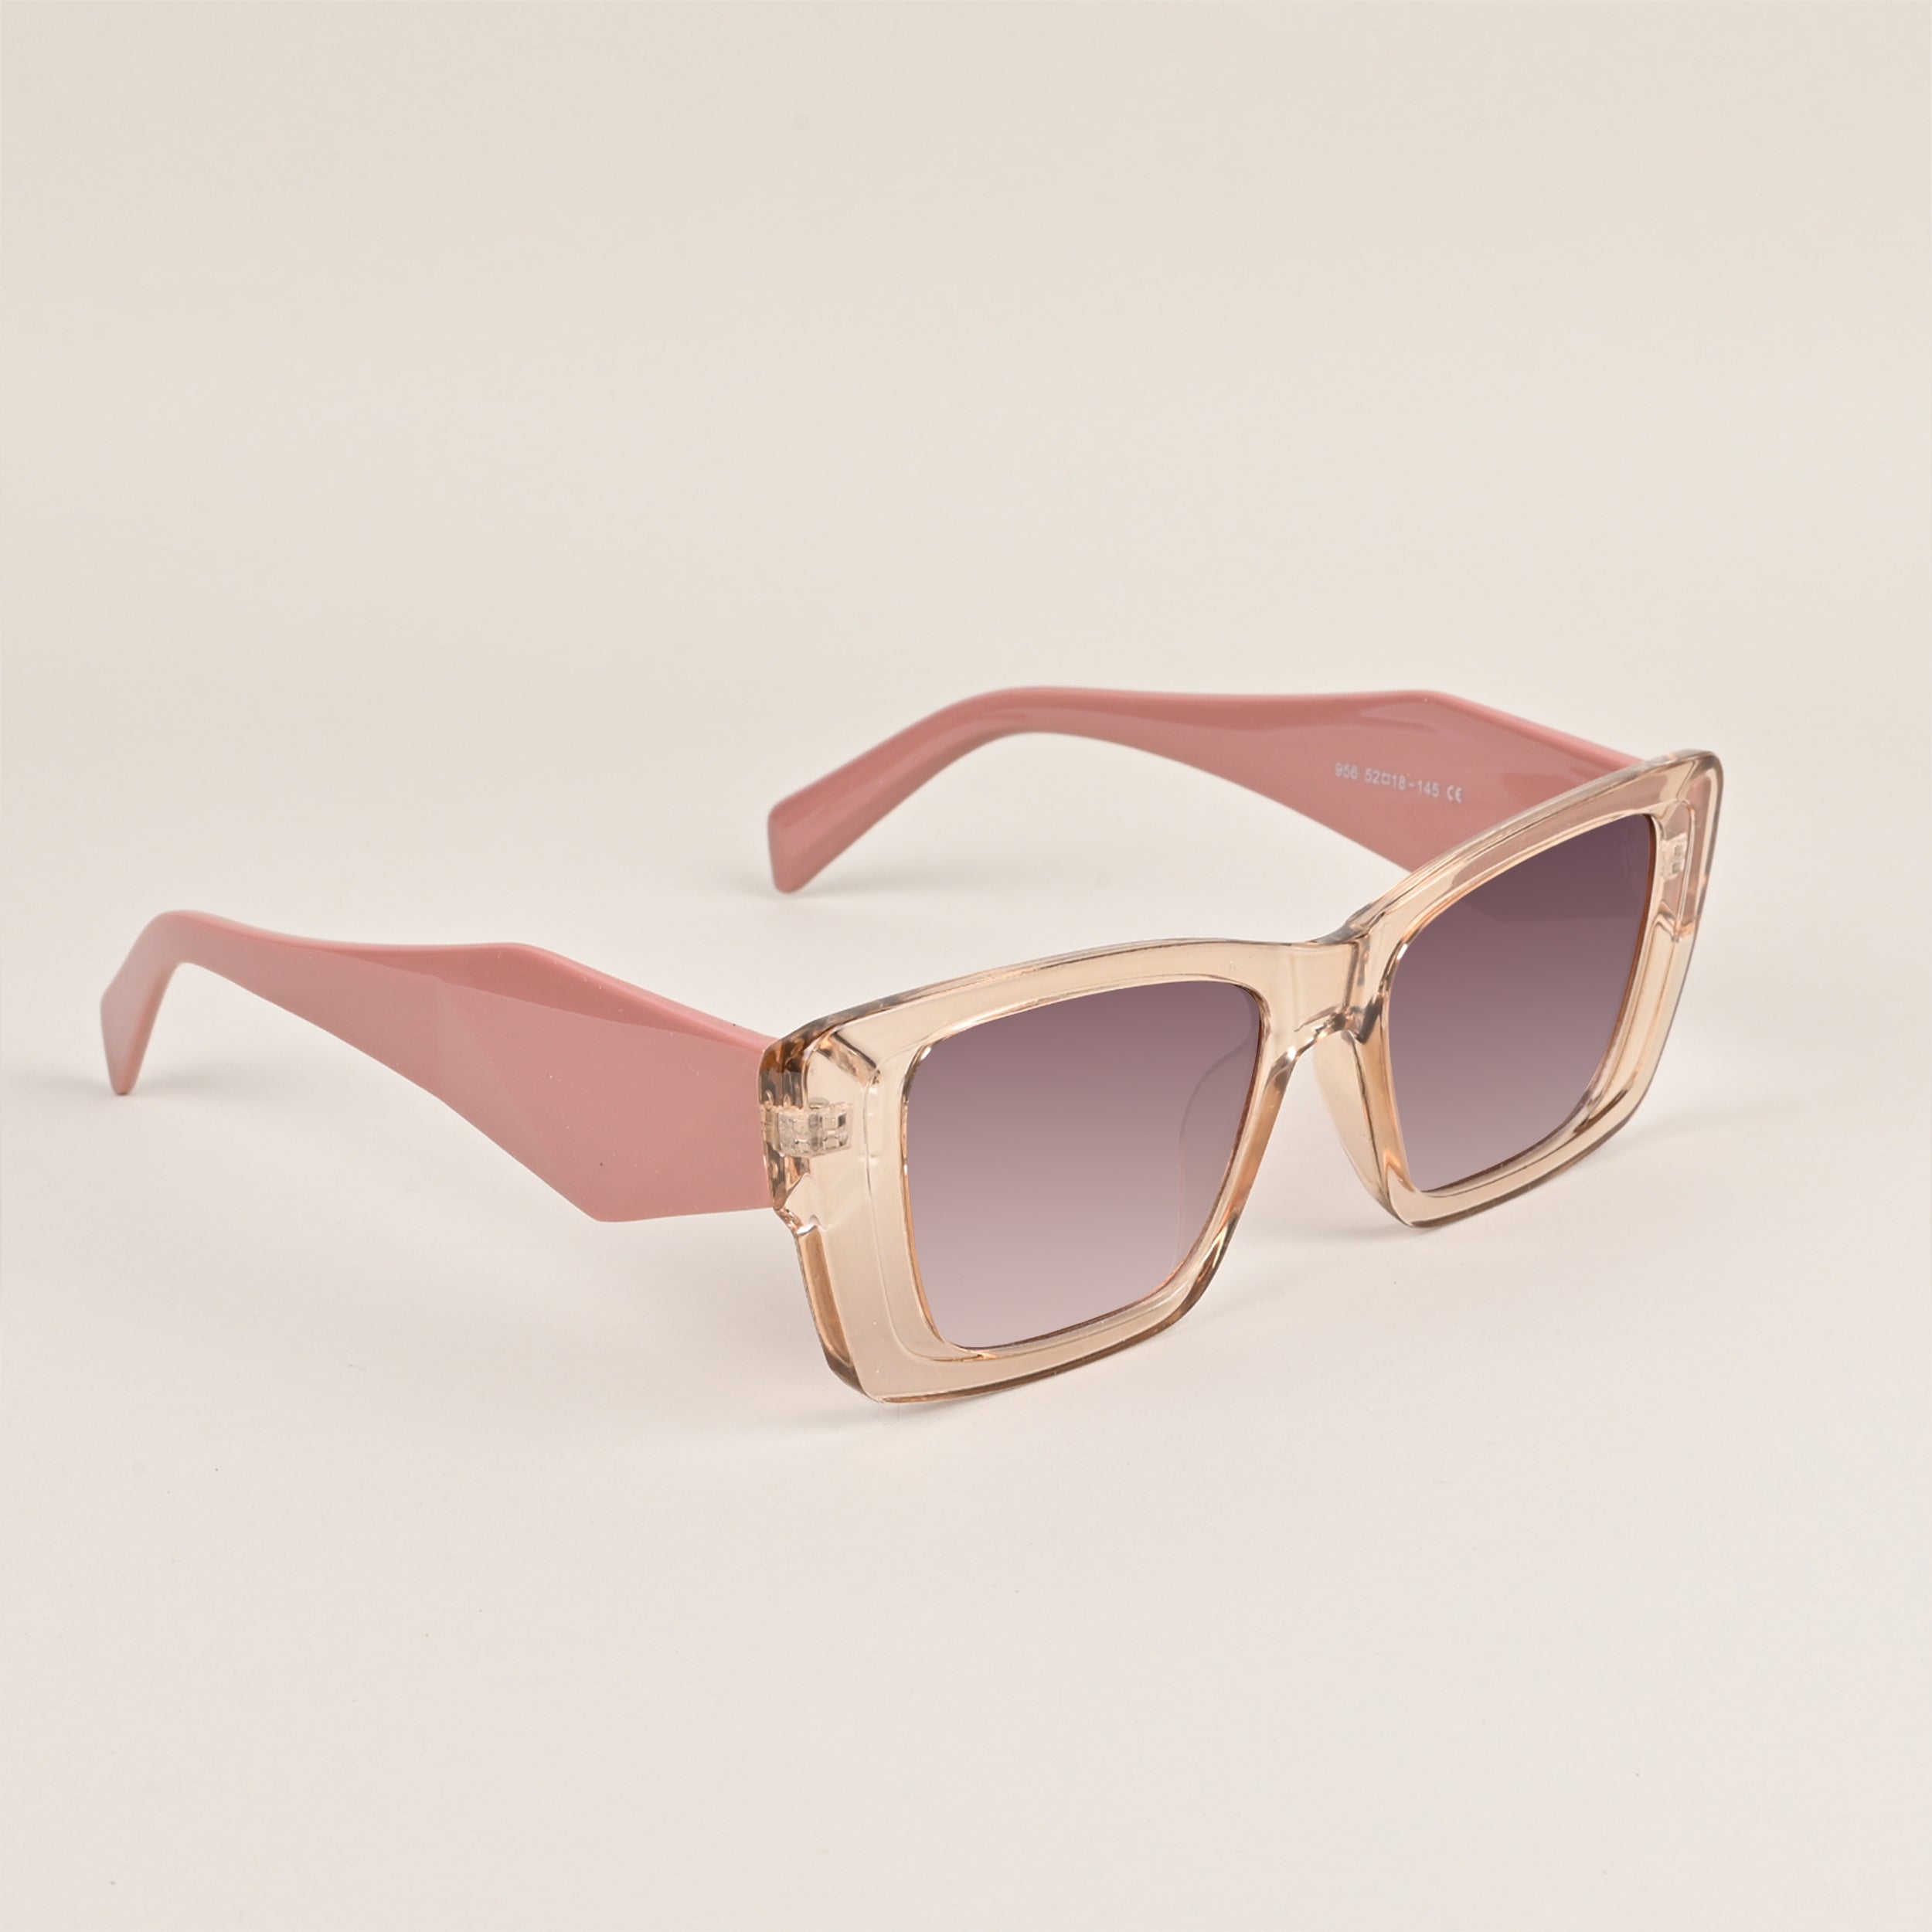 Voyage Nude/Light Brown Cateye Sunglasses MG3685